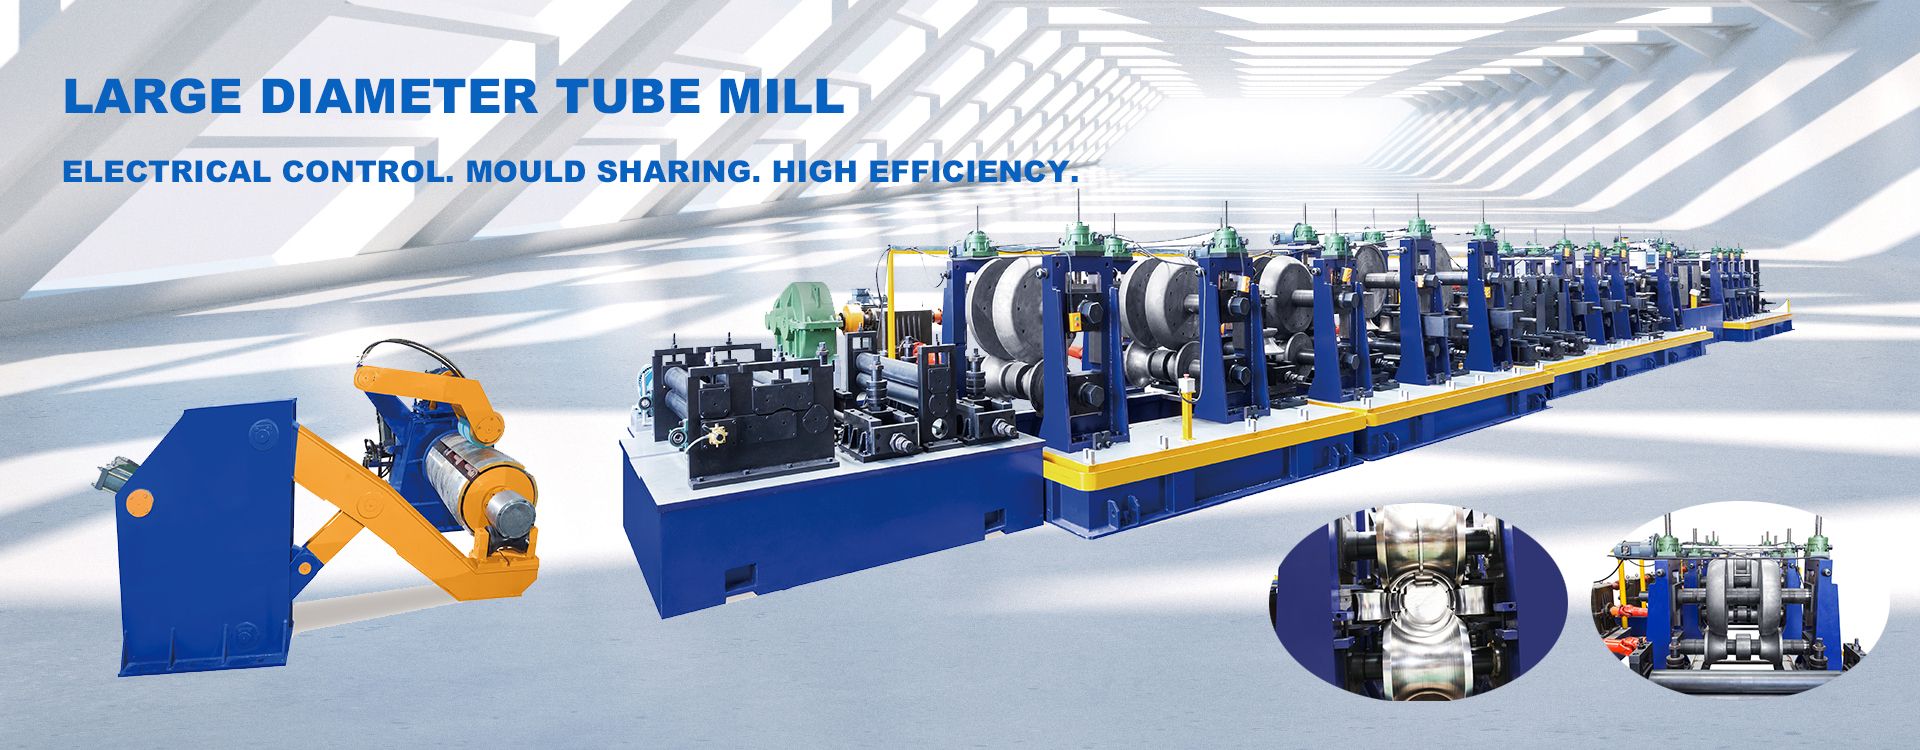 Large diameter tube mill